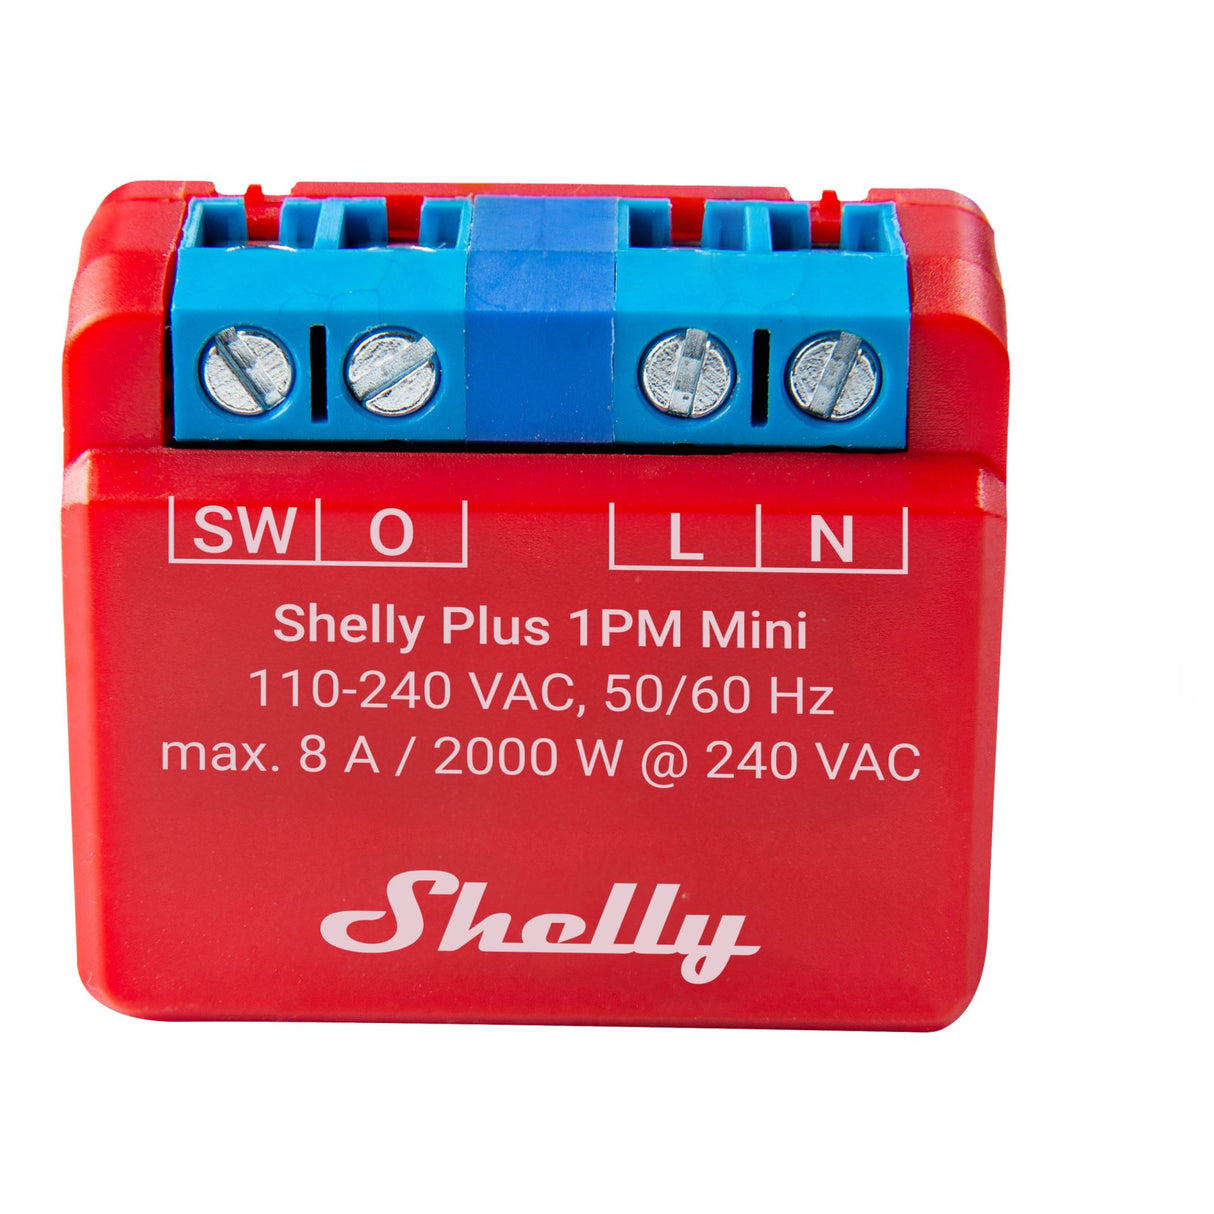 Shelly Plus 1PM Mini - Relais - WLAN & Bluetooth - Smart Home - Kompatibel mit amazon Alexa & Google Home